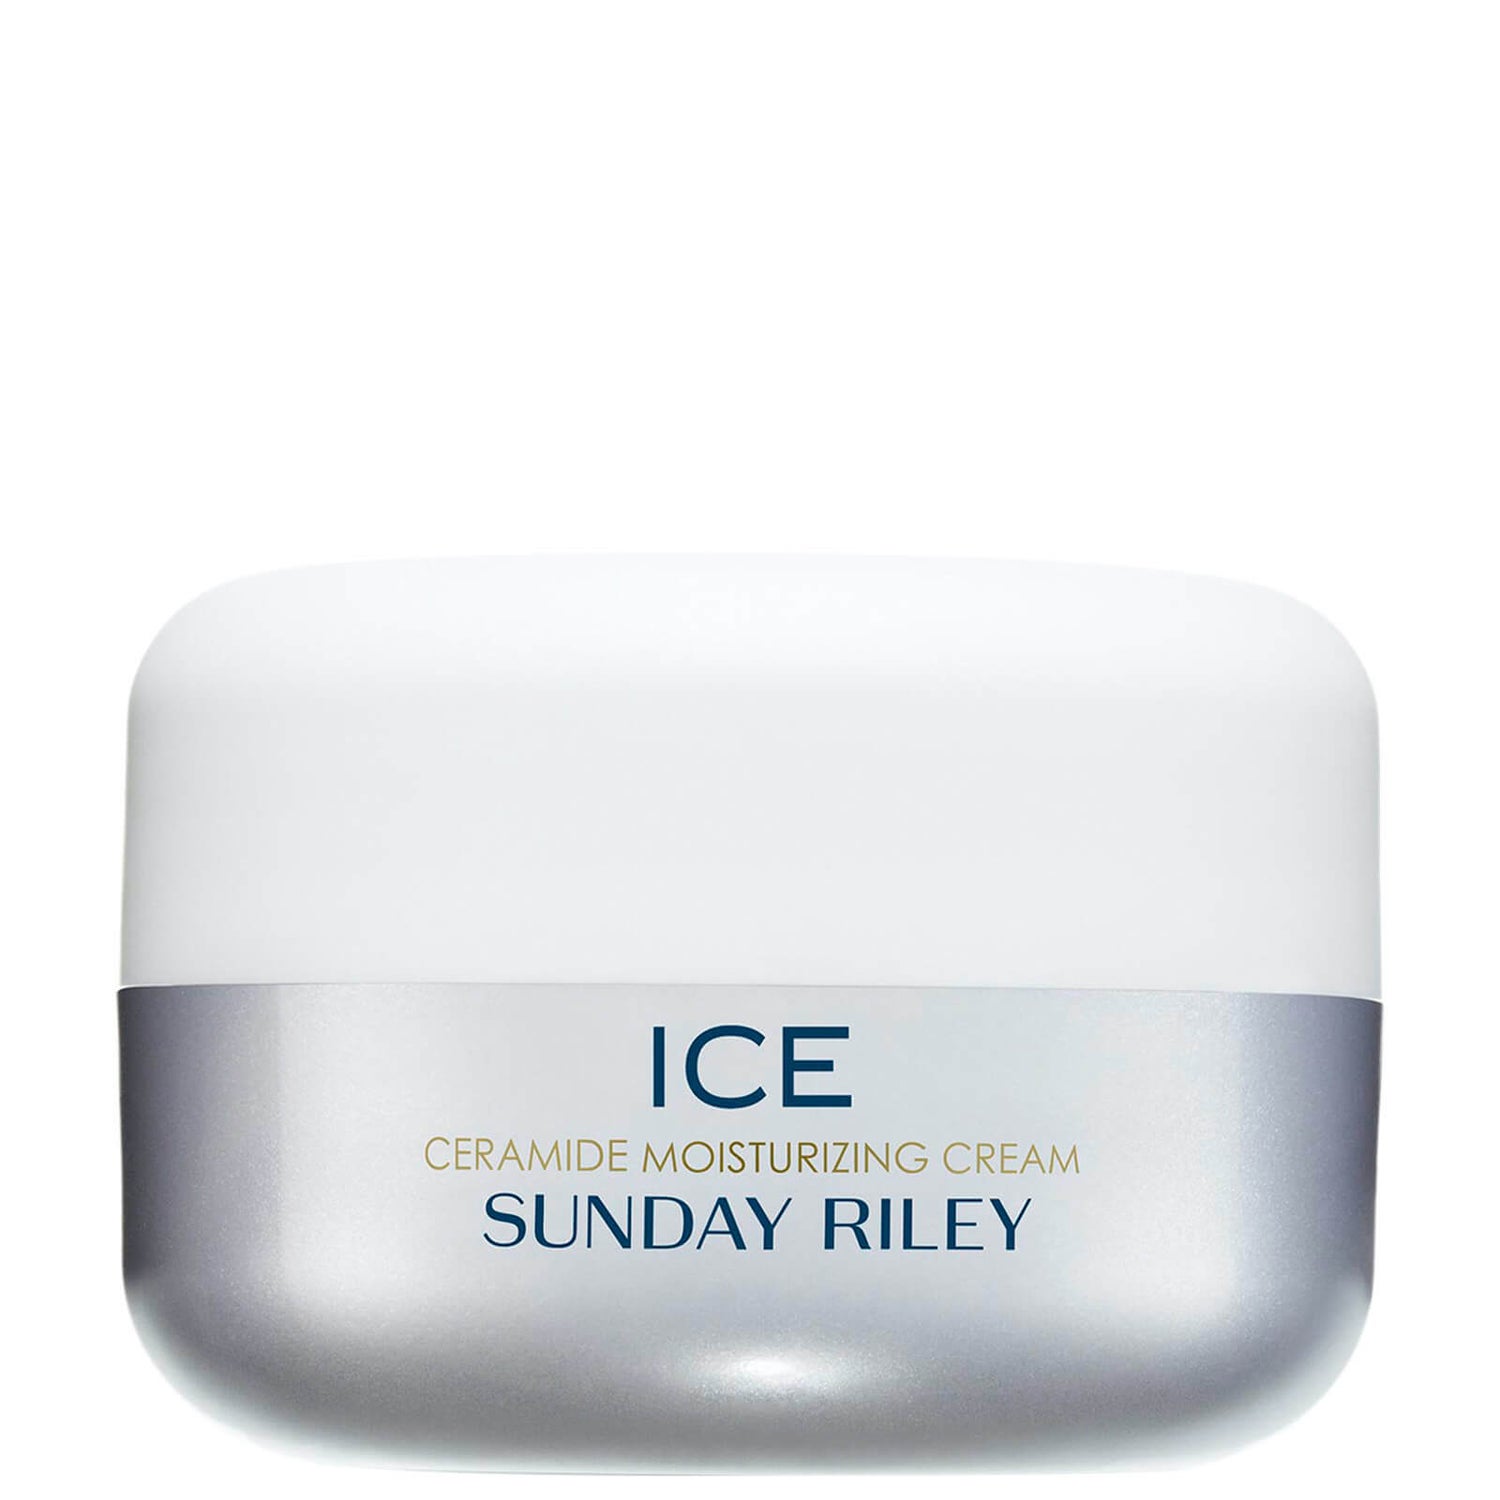 Sunday Riley Ice Ceramide Moisturizing Cream 15g